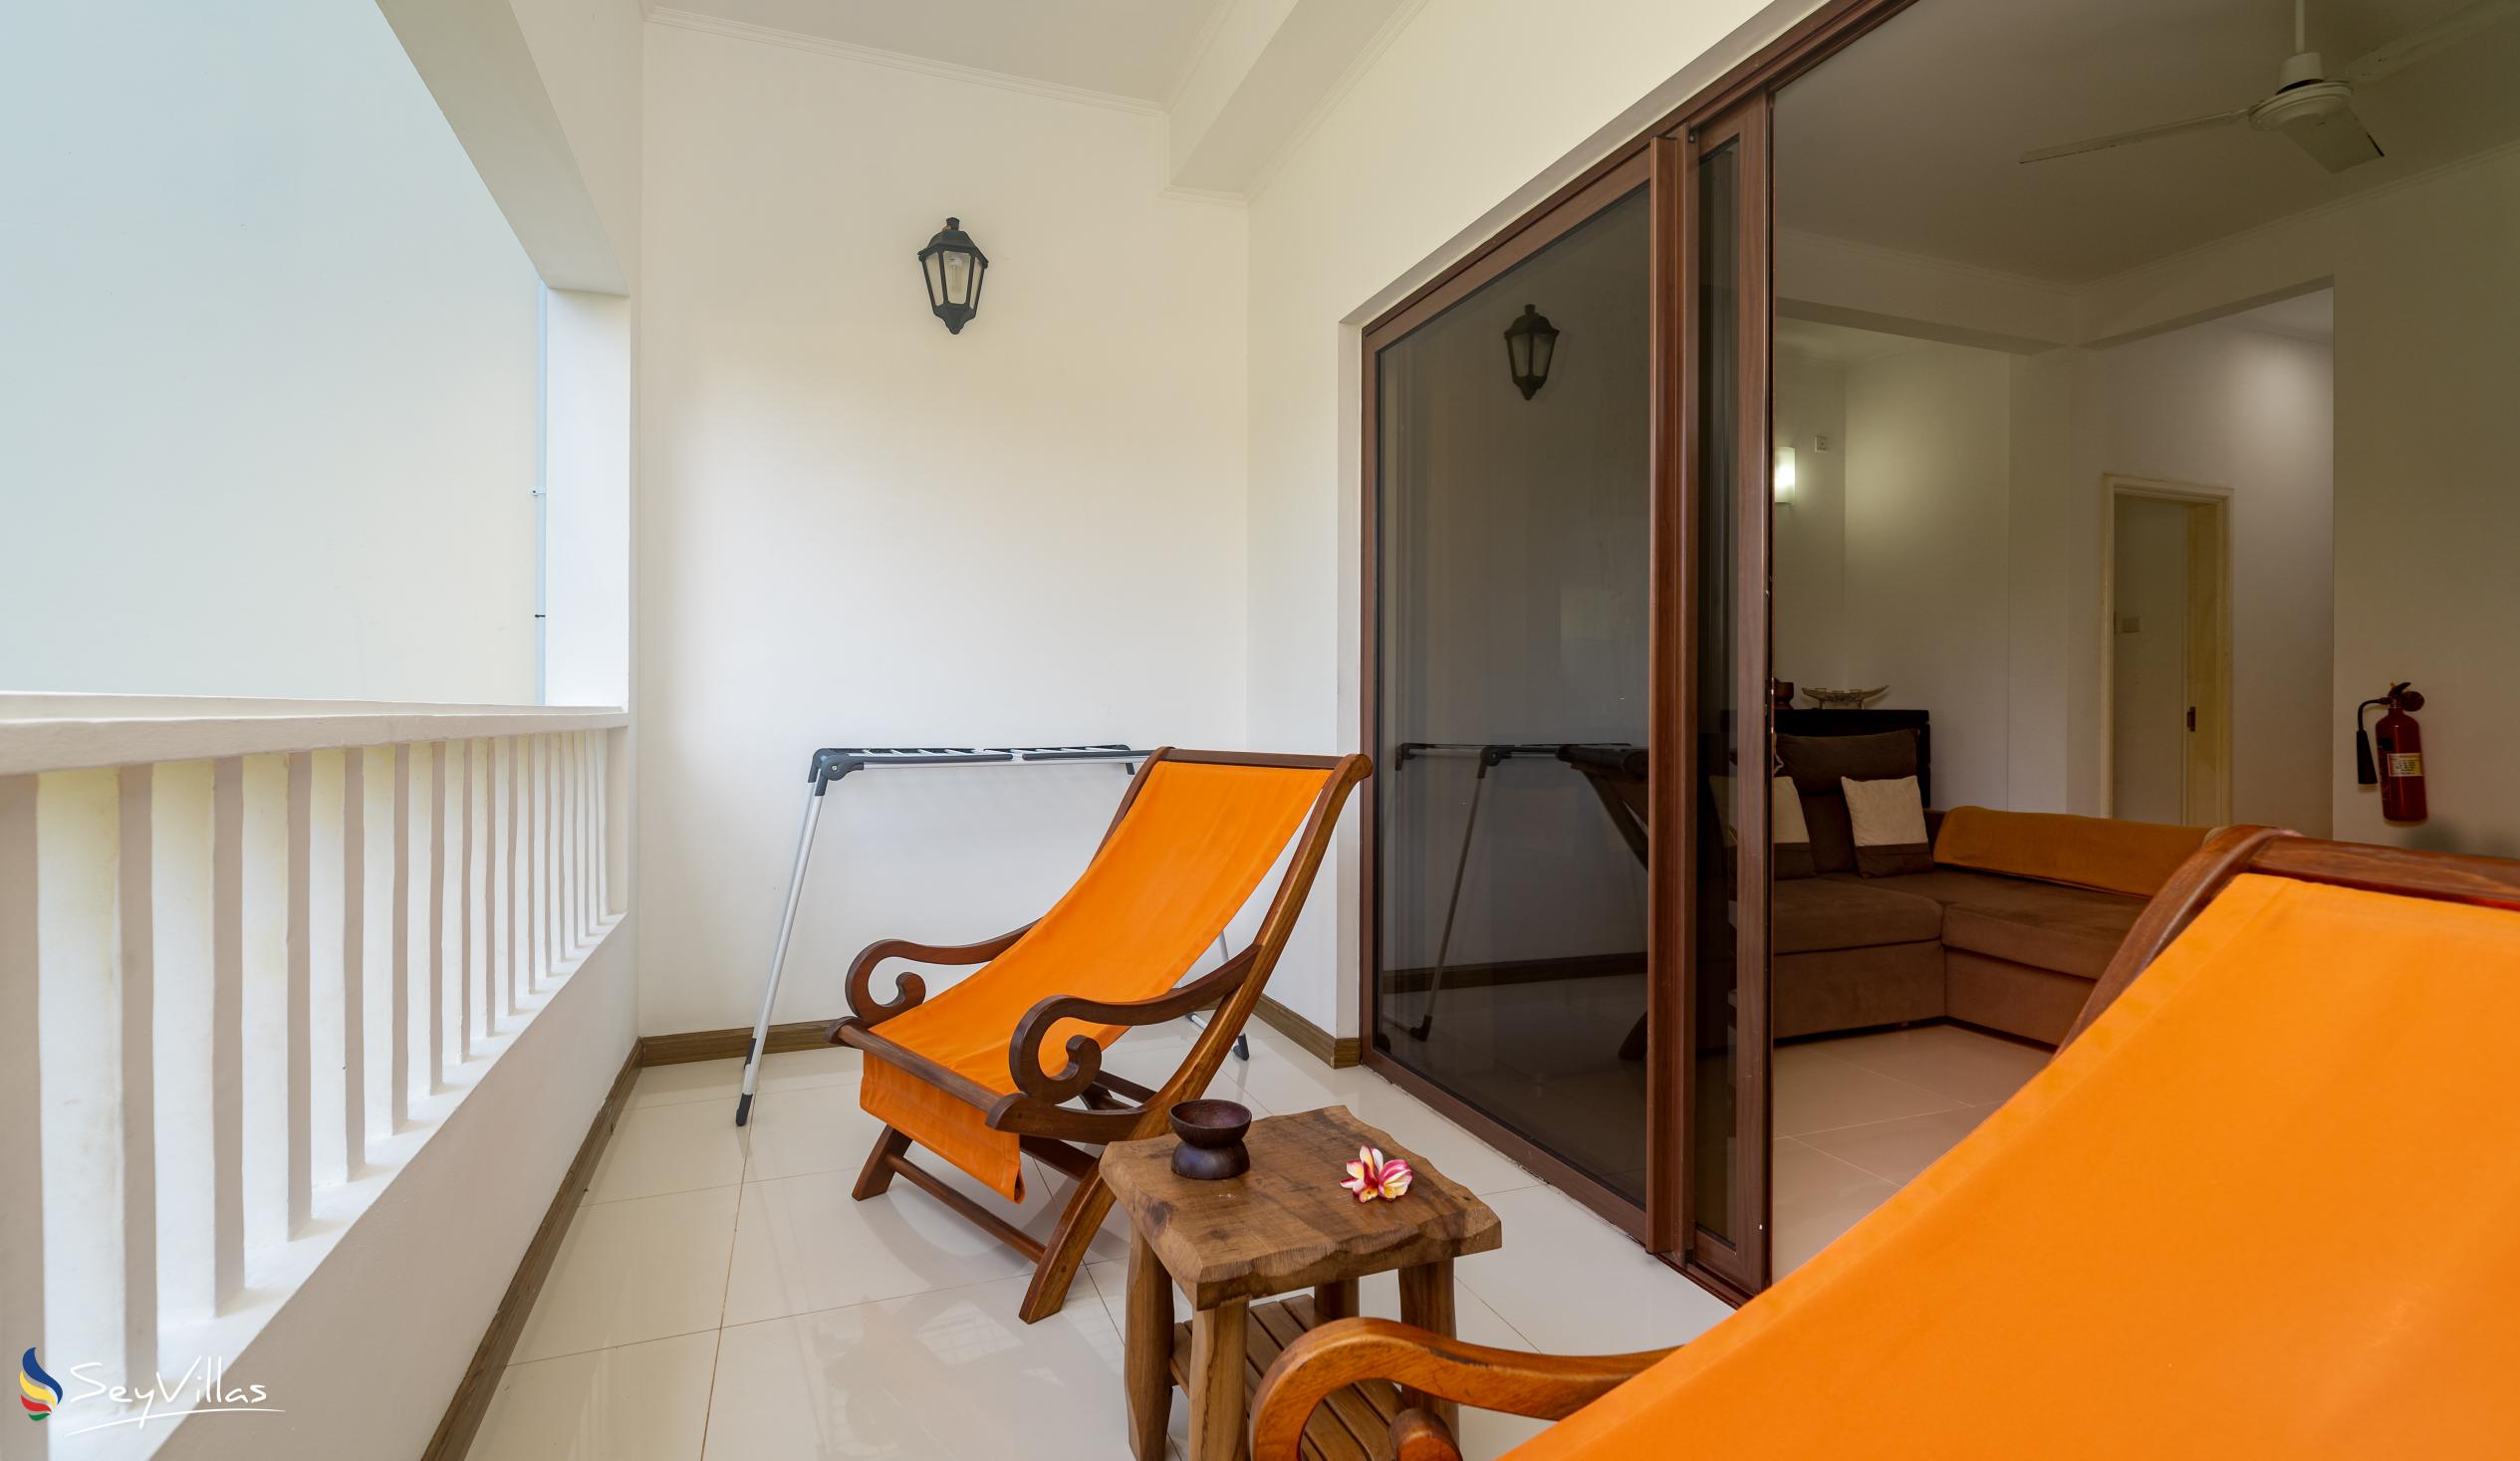 Foto 20: Kanasuk Self Catering Apartments - Appartement Cinnamon 2 chambres - Mahé (Seychelles)